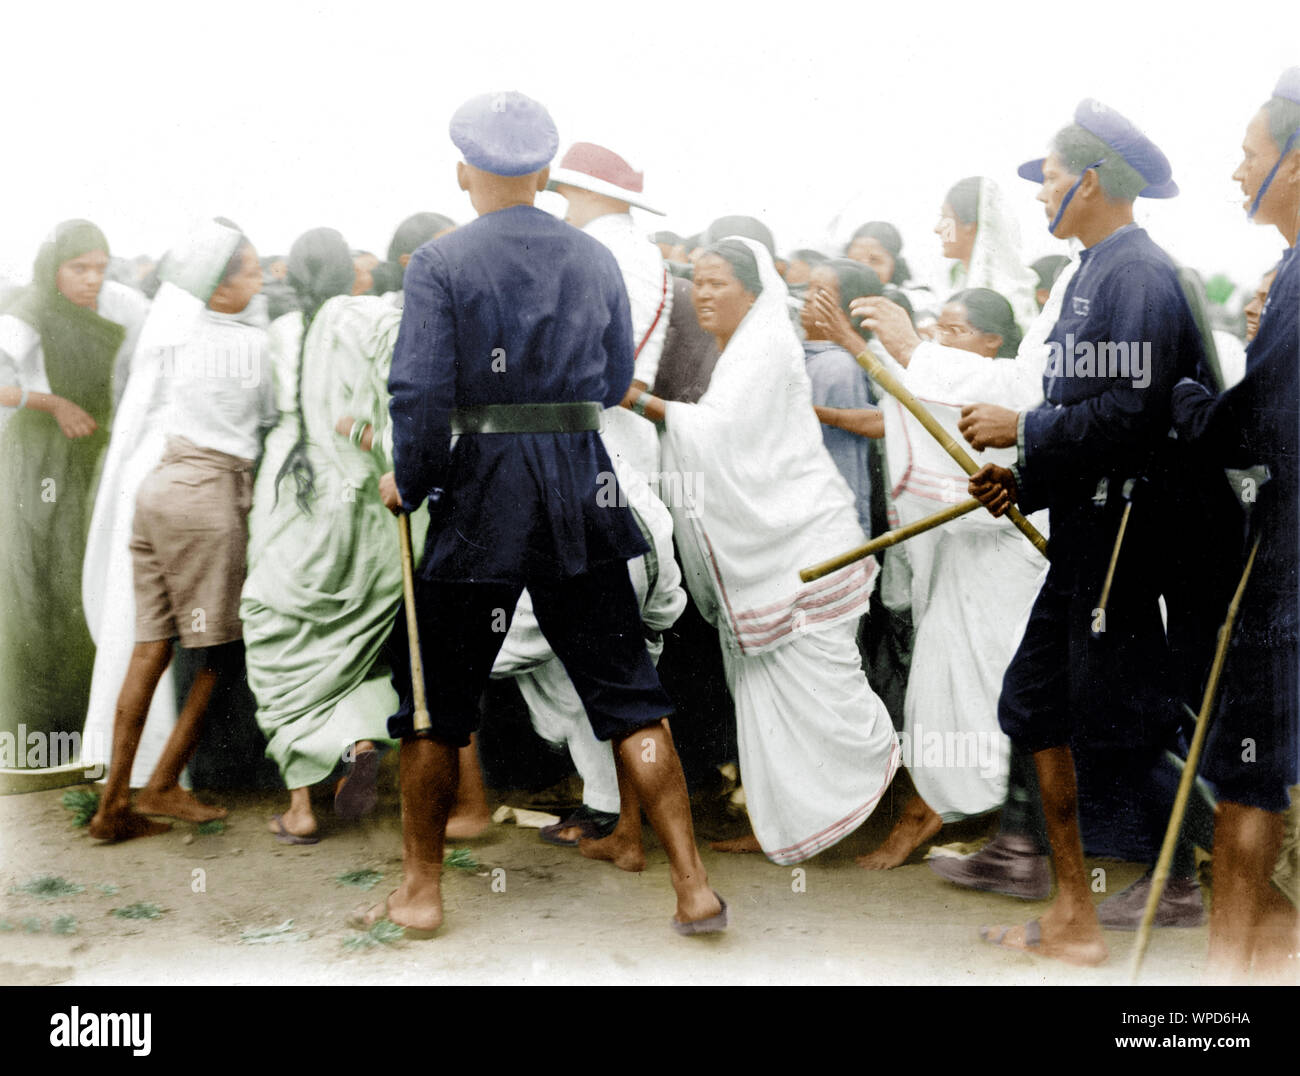 Policemen controlling demonstrators during the Salt Satyagraha, Bombay, India, 1930 Stock Photo